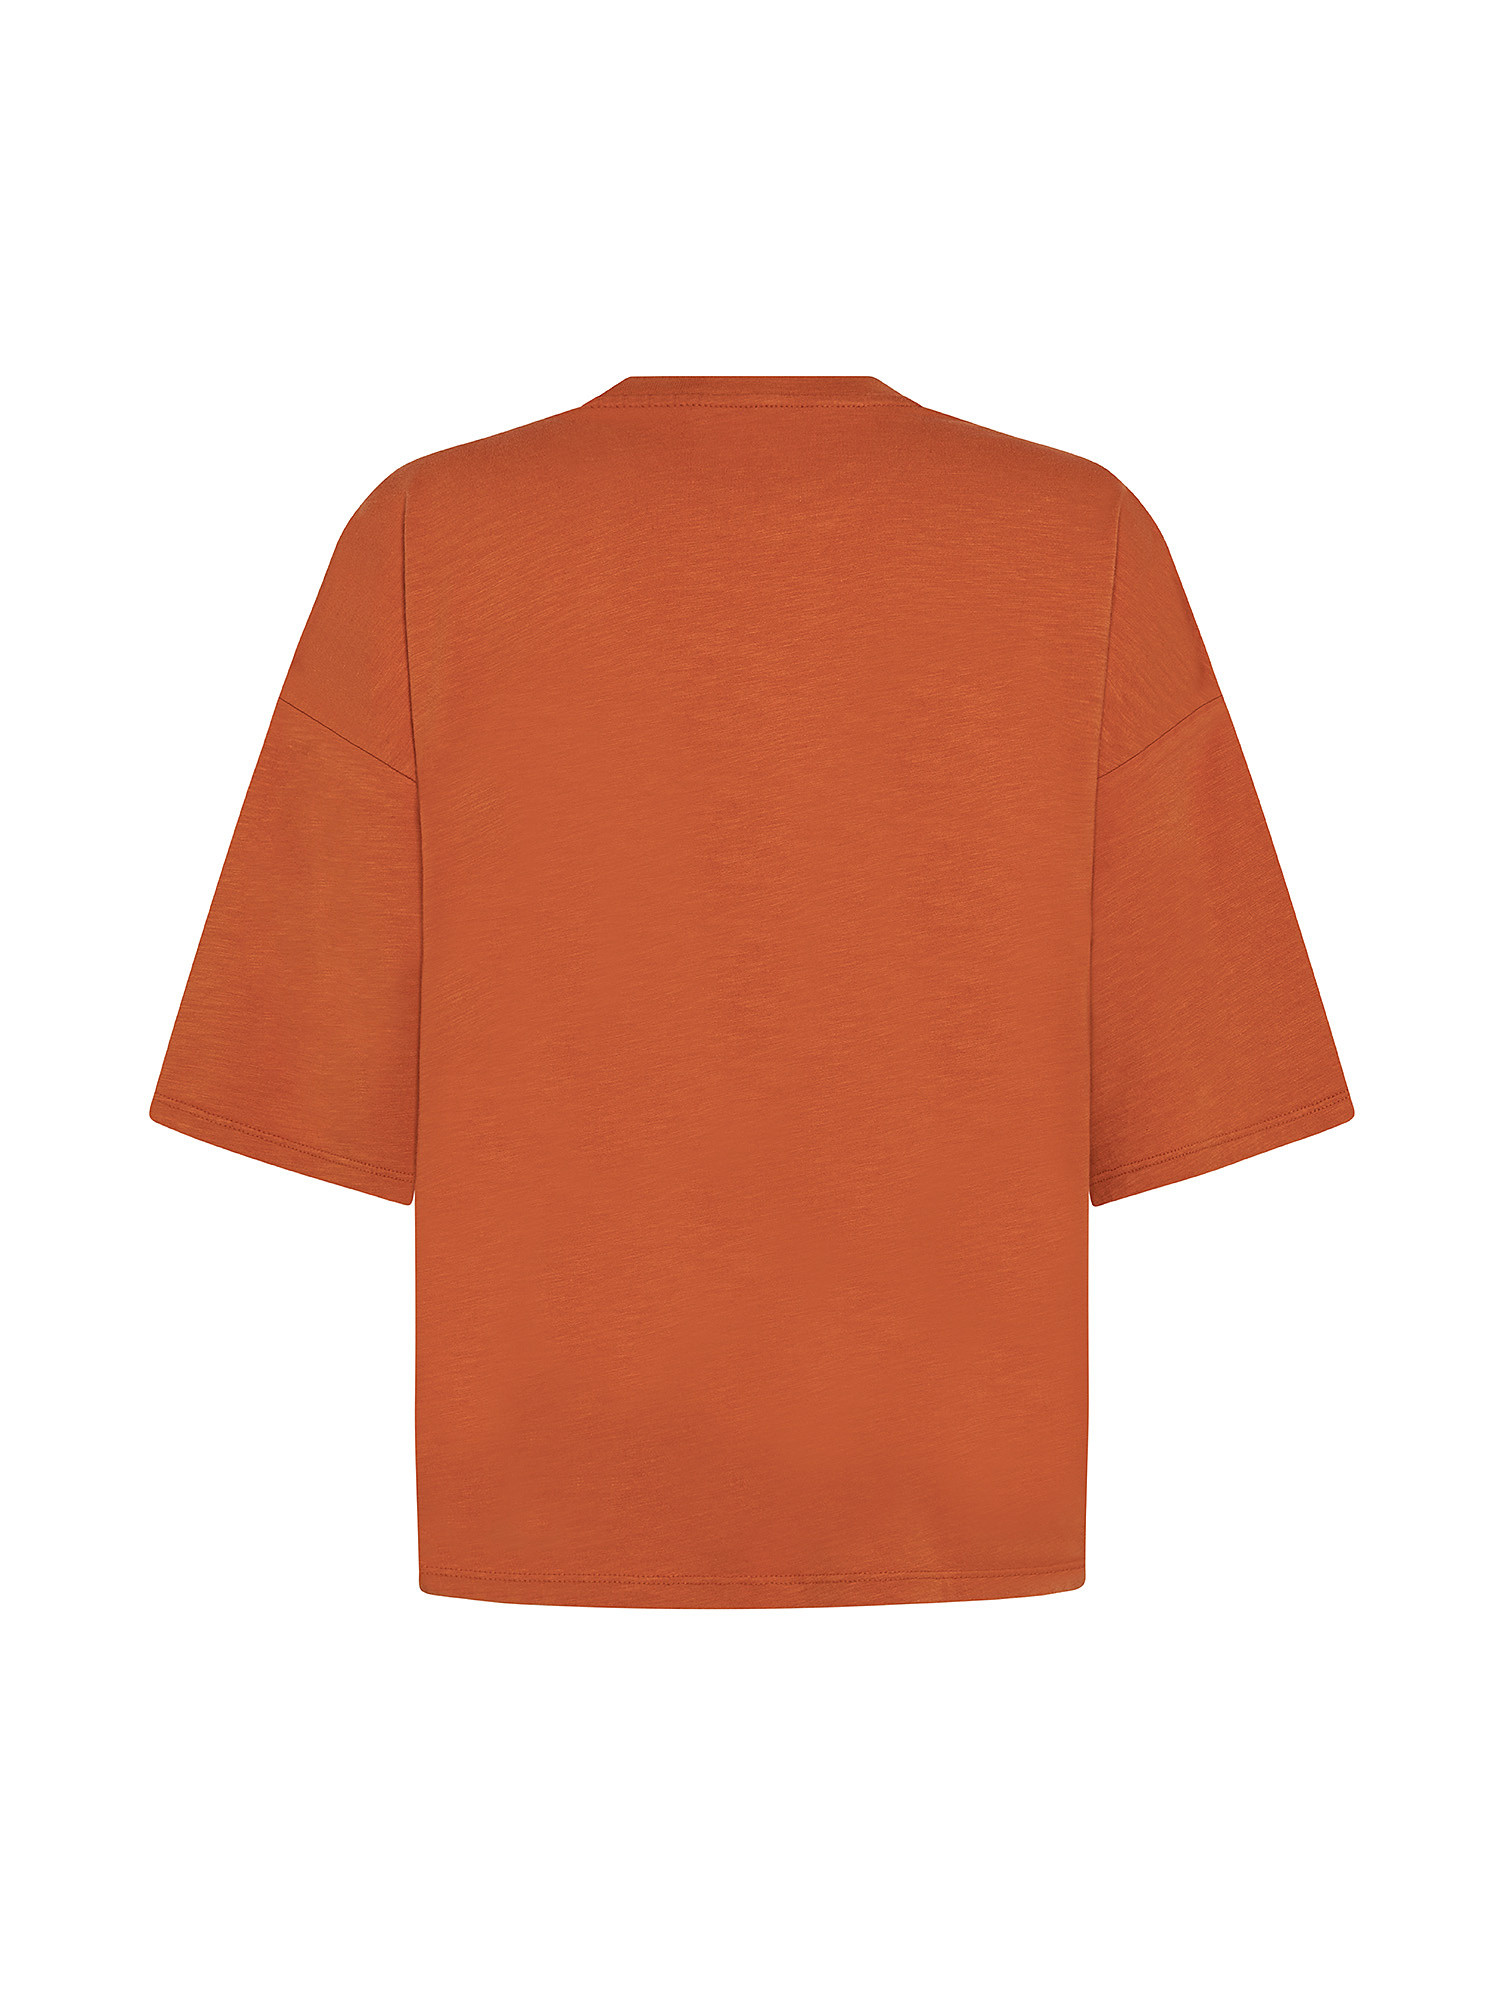 Graphic Drapey Tee, Orange, large image number 1